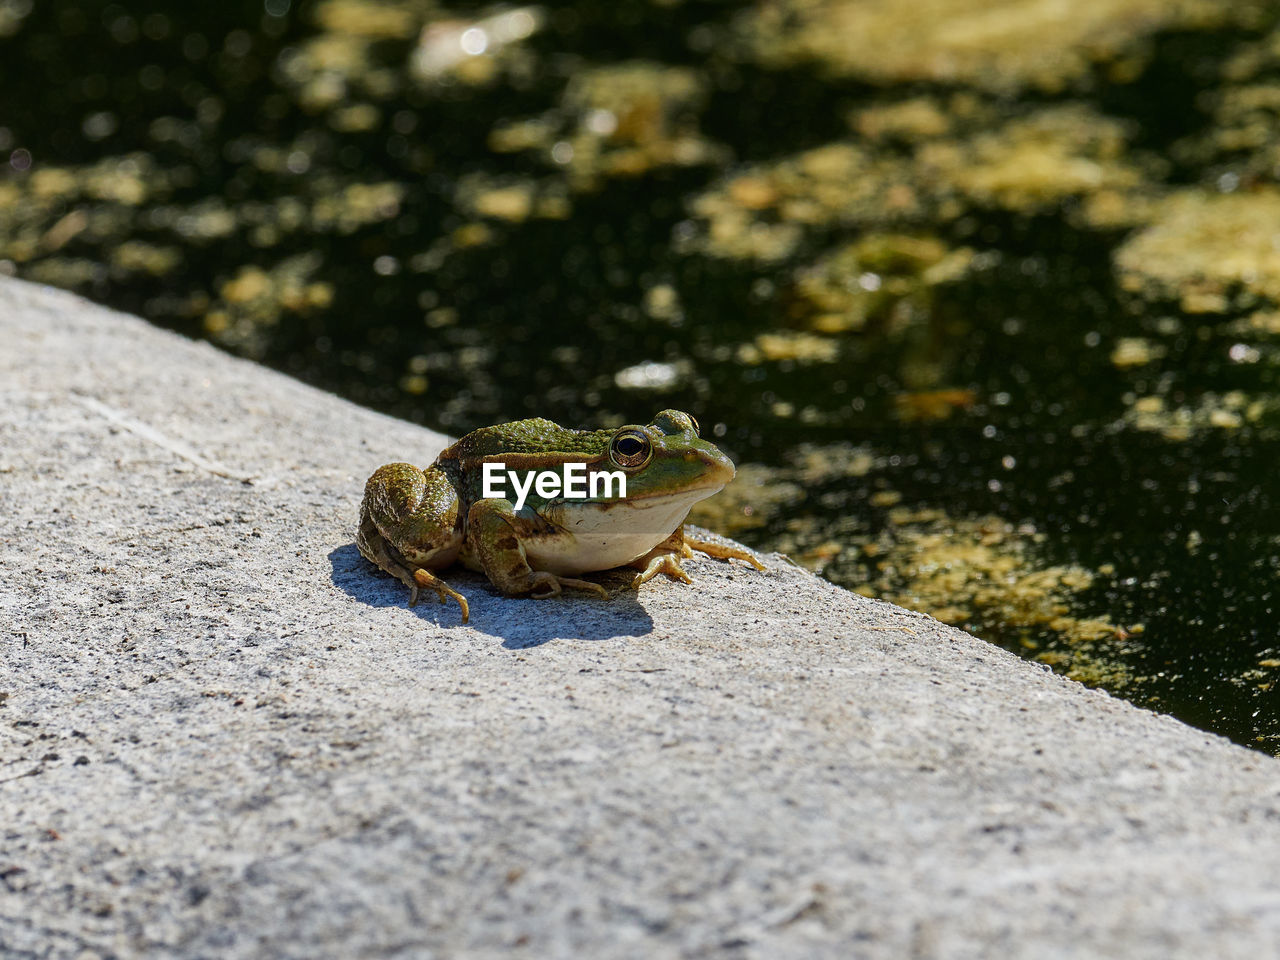 Frog beside a pond, near almansa, spain